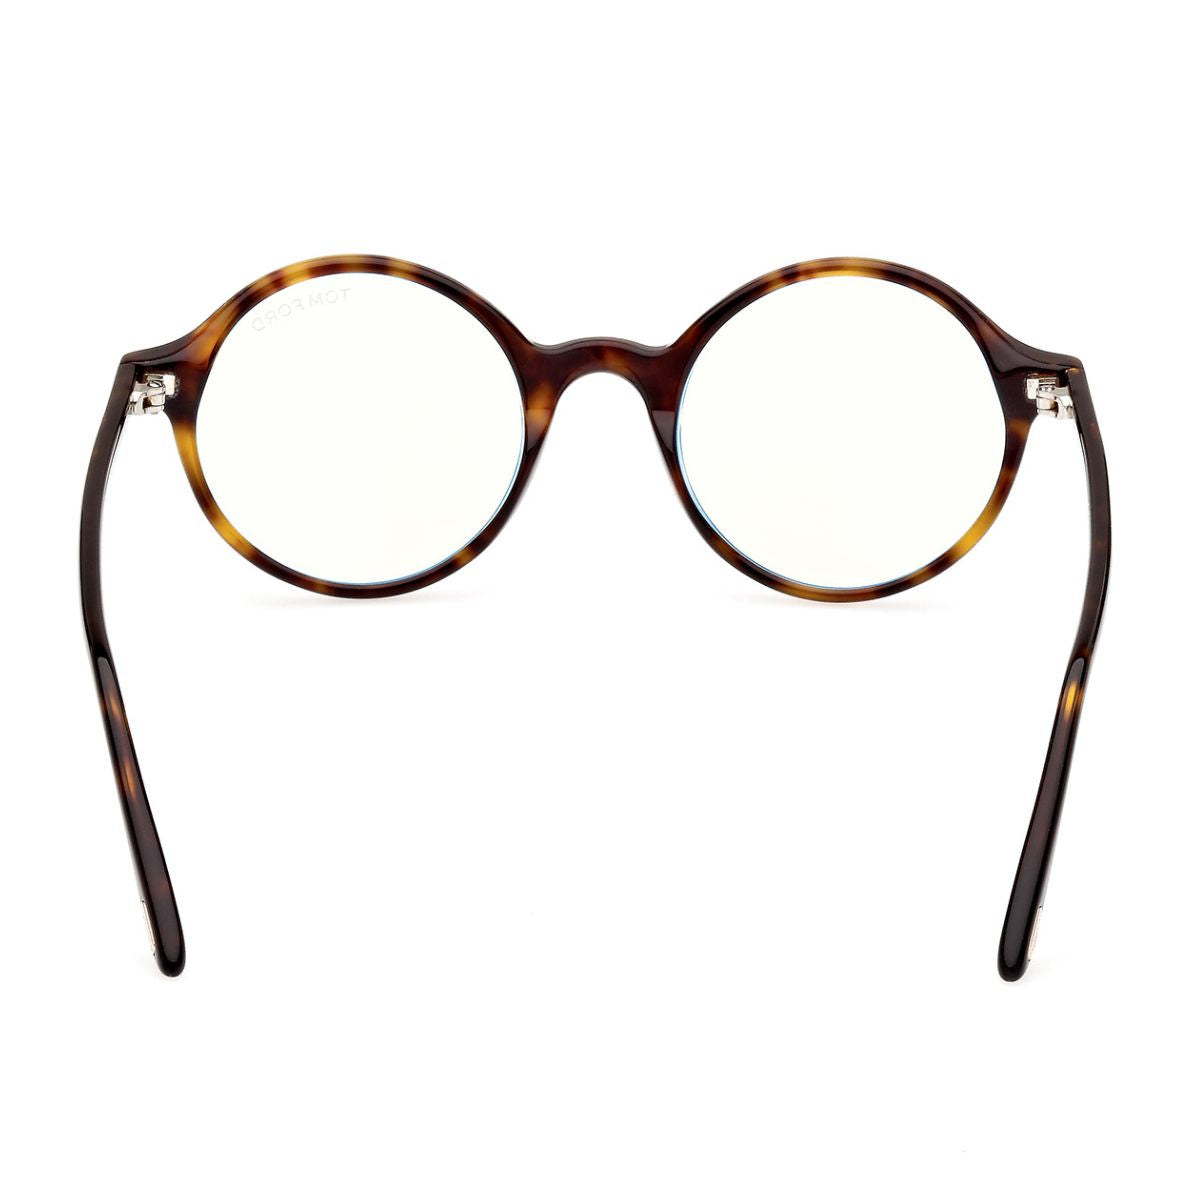 "Buy Tom Ford Trendy Rounded Eyewear Eyeglass At Optorium